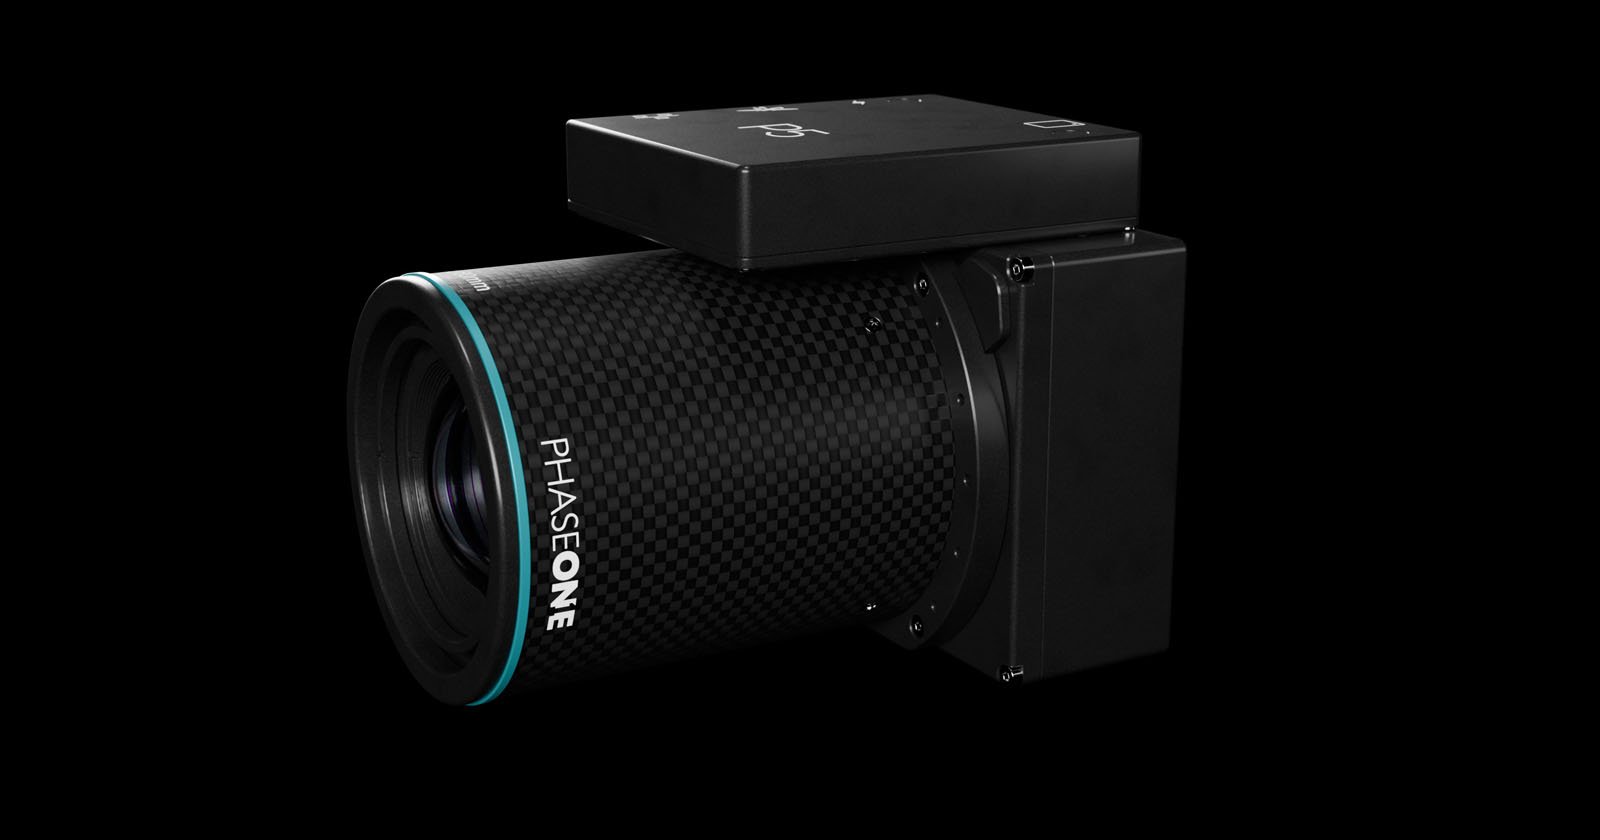  phase one 128-megapixel medium format camera built 